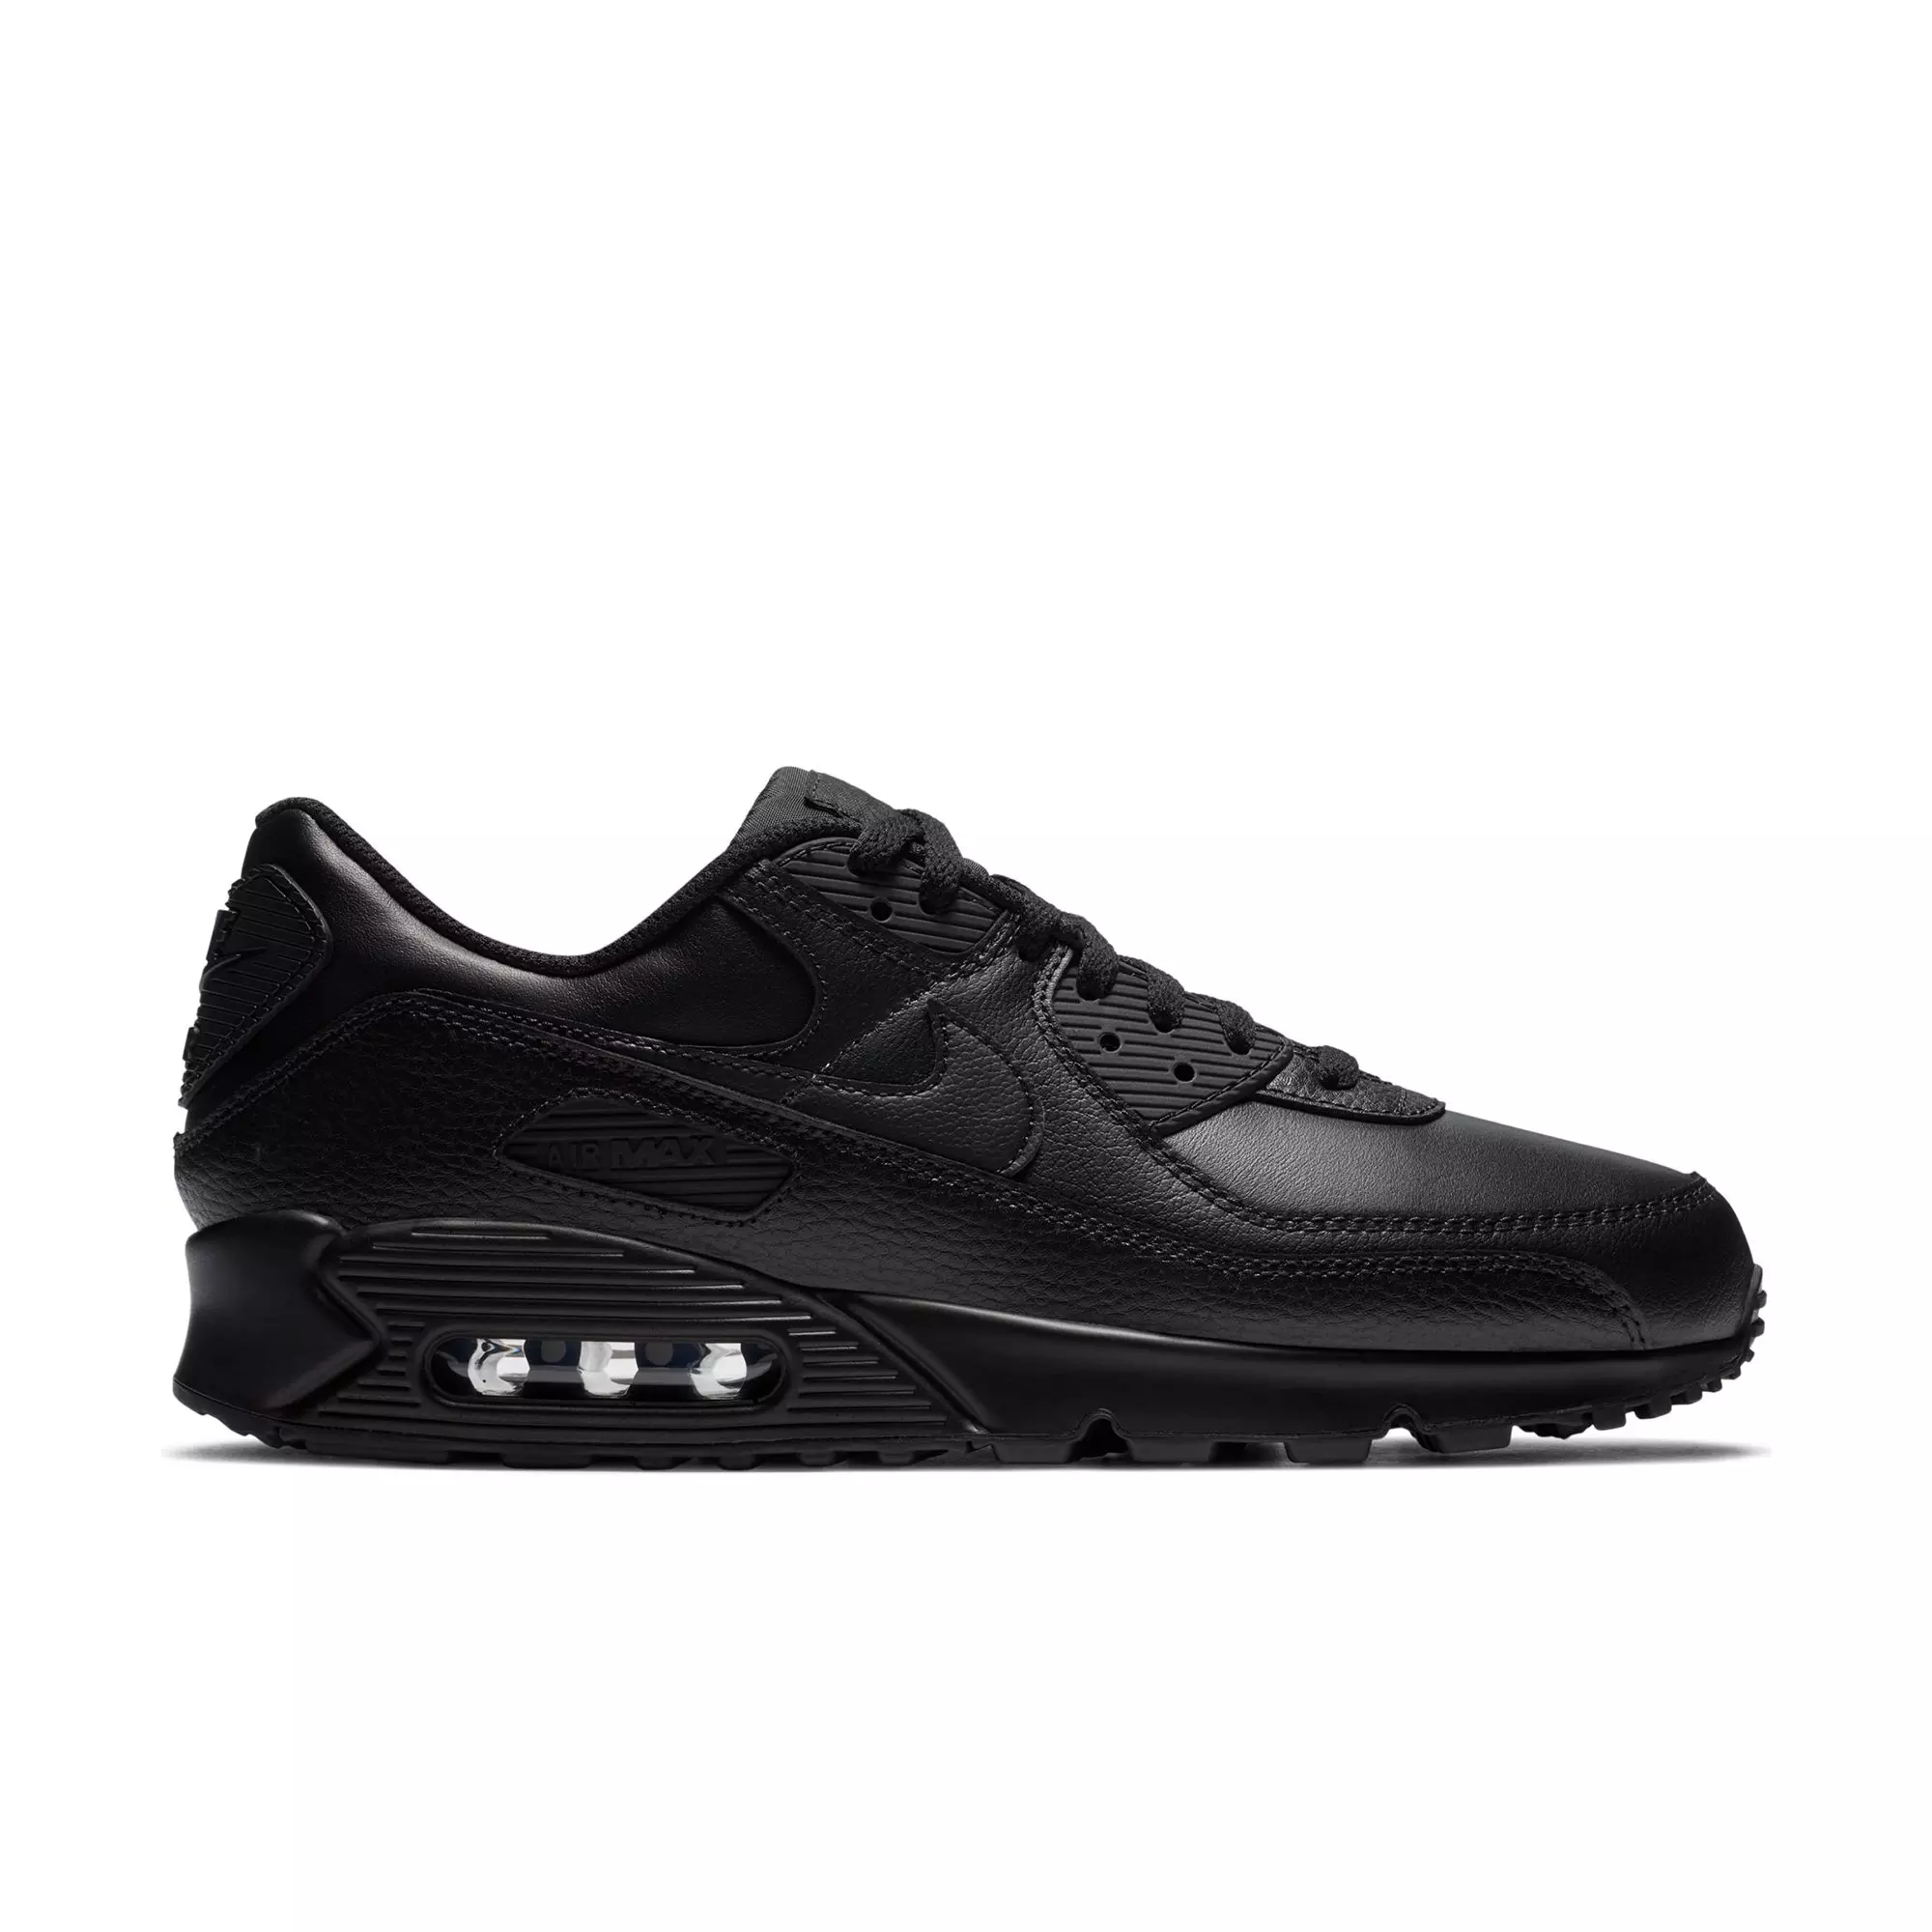 Nike Air Max 90 sneakers in black